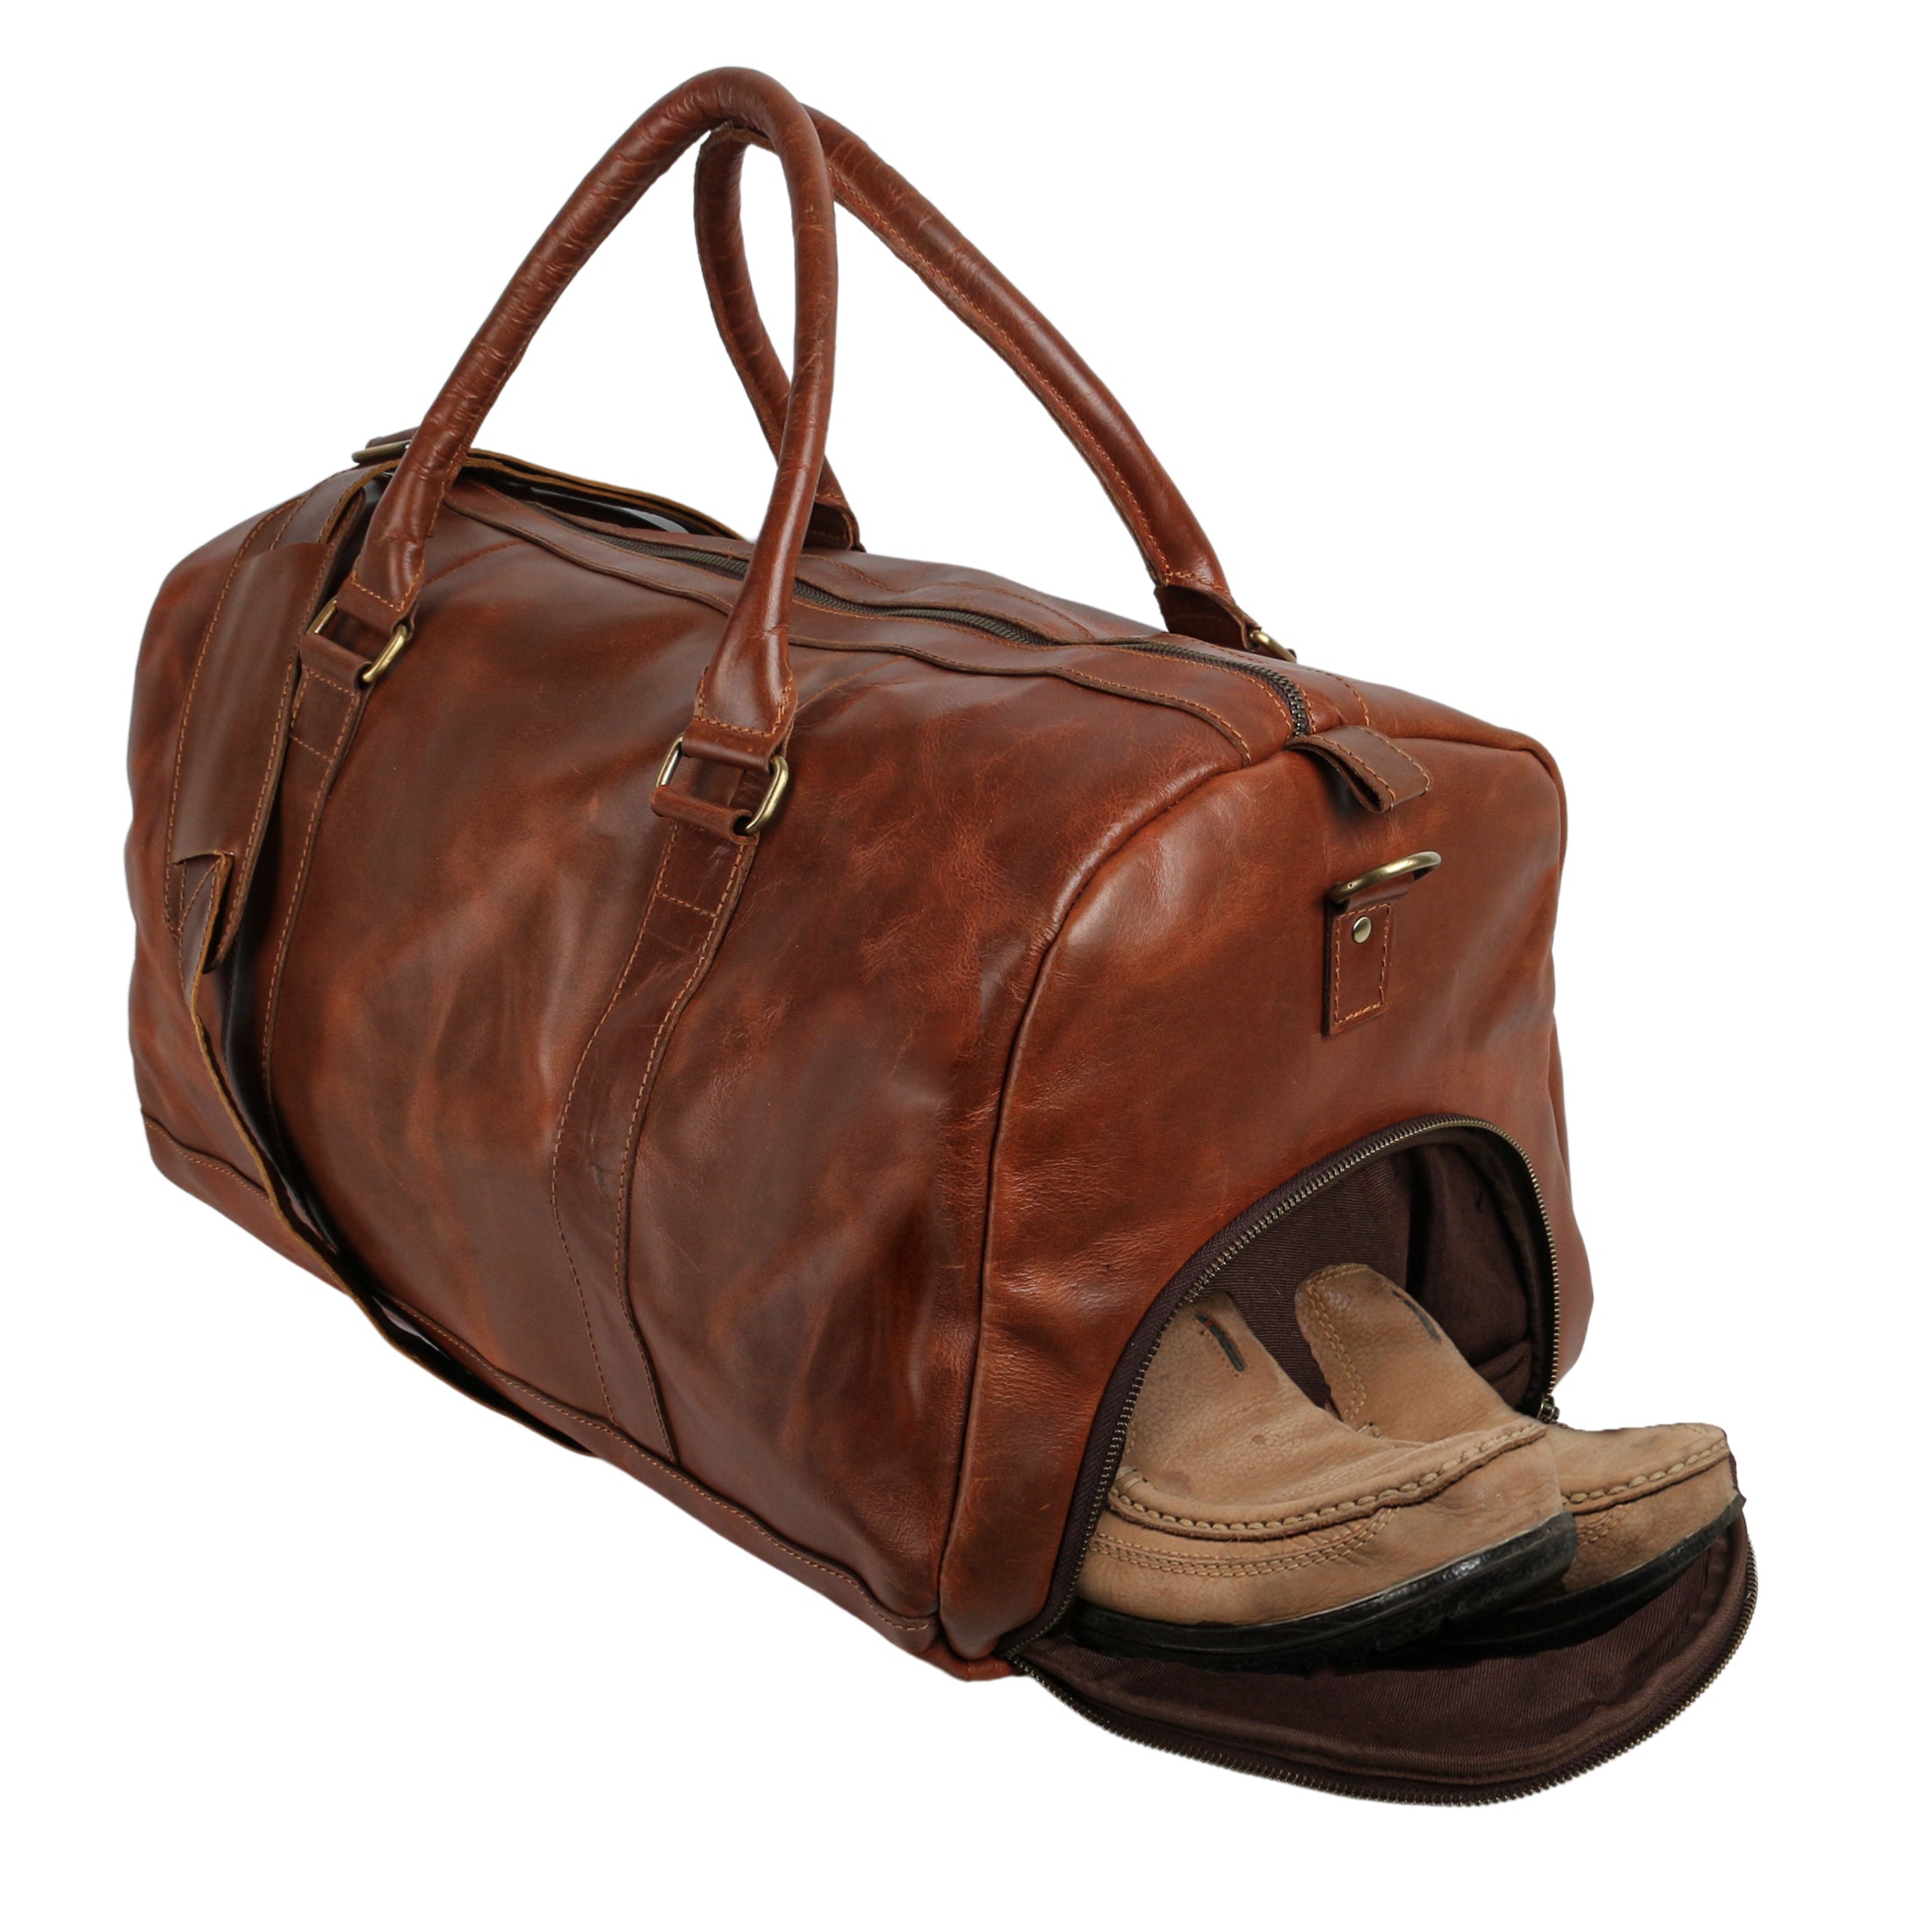 Komalc Genuine Leather Duffel | Travel Overnight Weekend Leather Bag | Sports Gym Duffel for Men